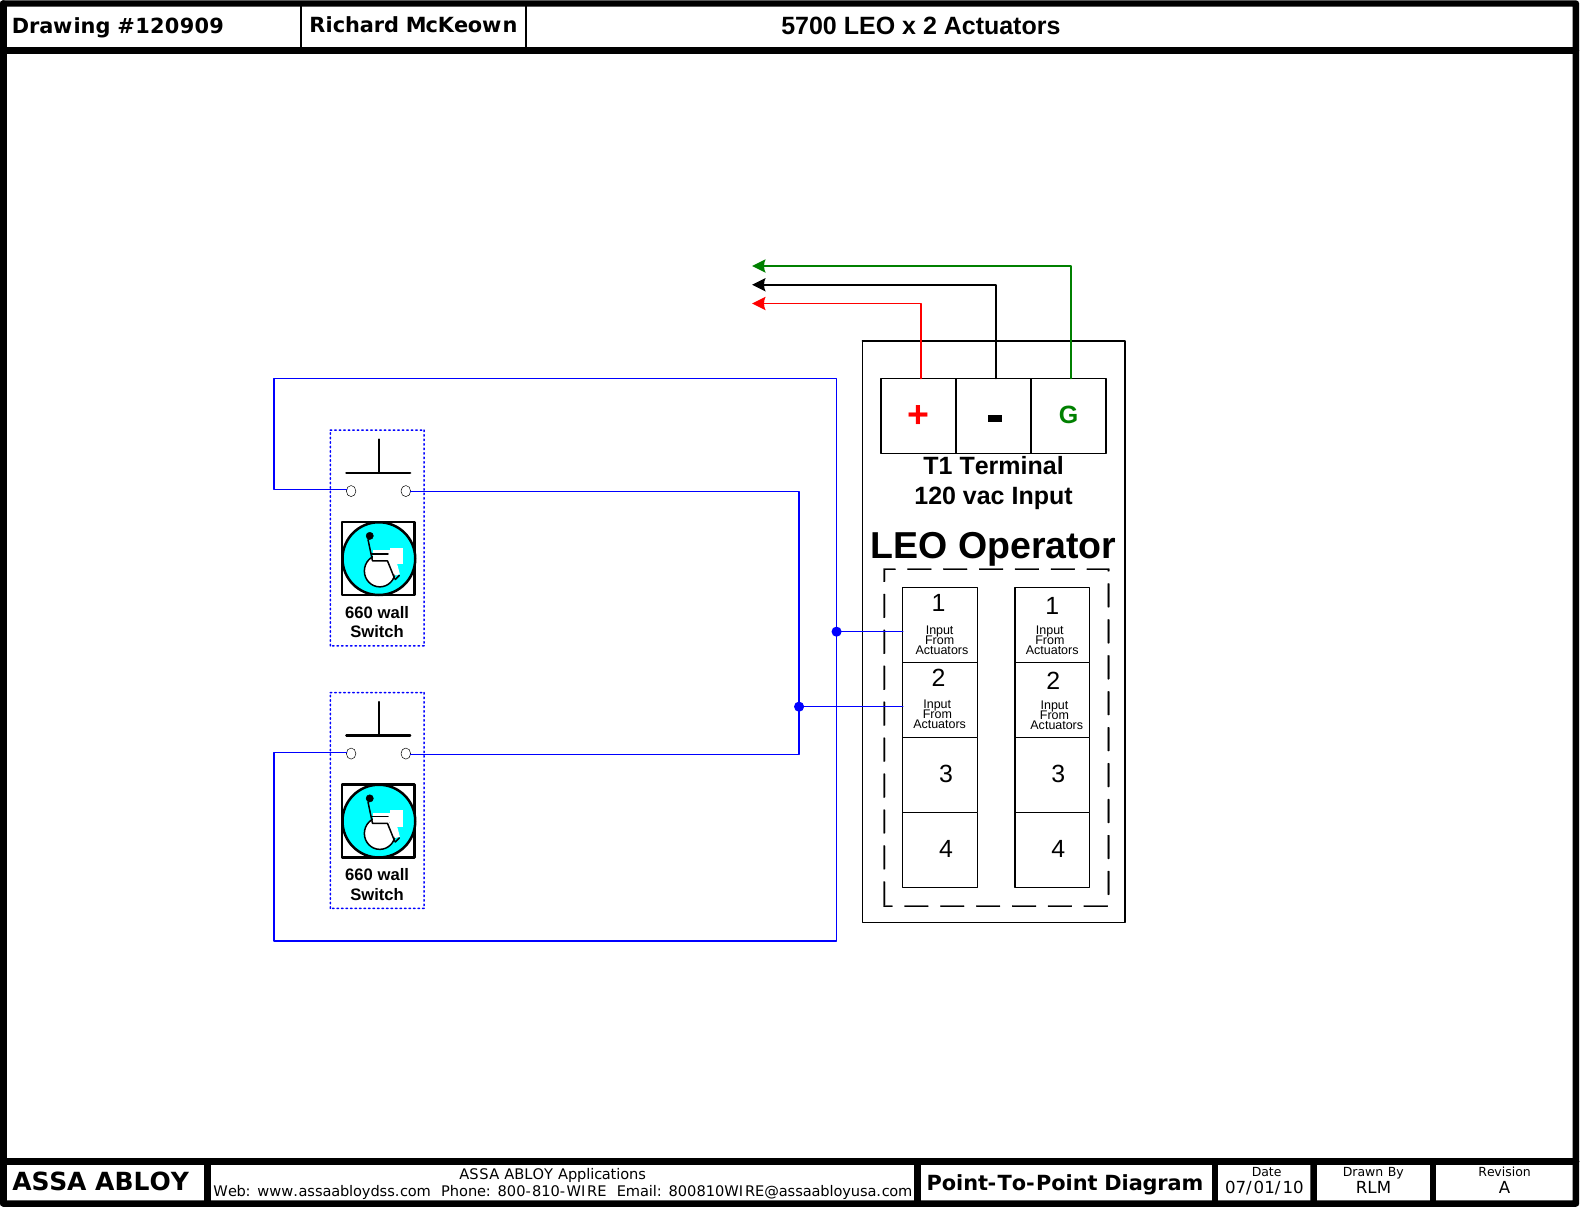 Page 1 of 1 - Norton Visio- Set 5700 Series Operator X 2 Actuators 120909